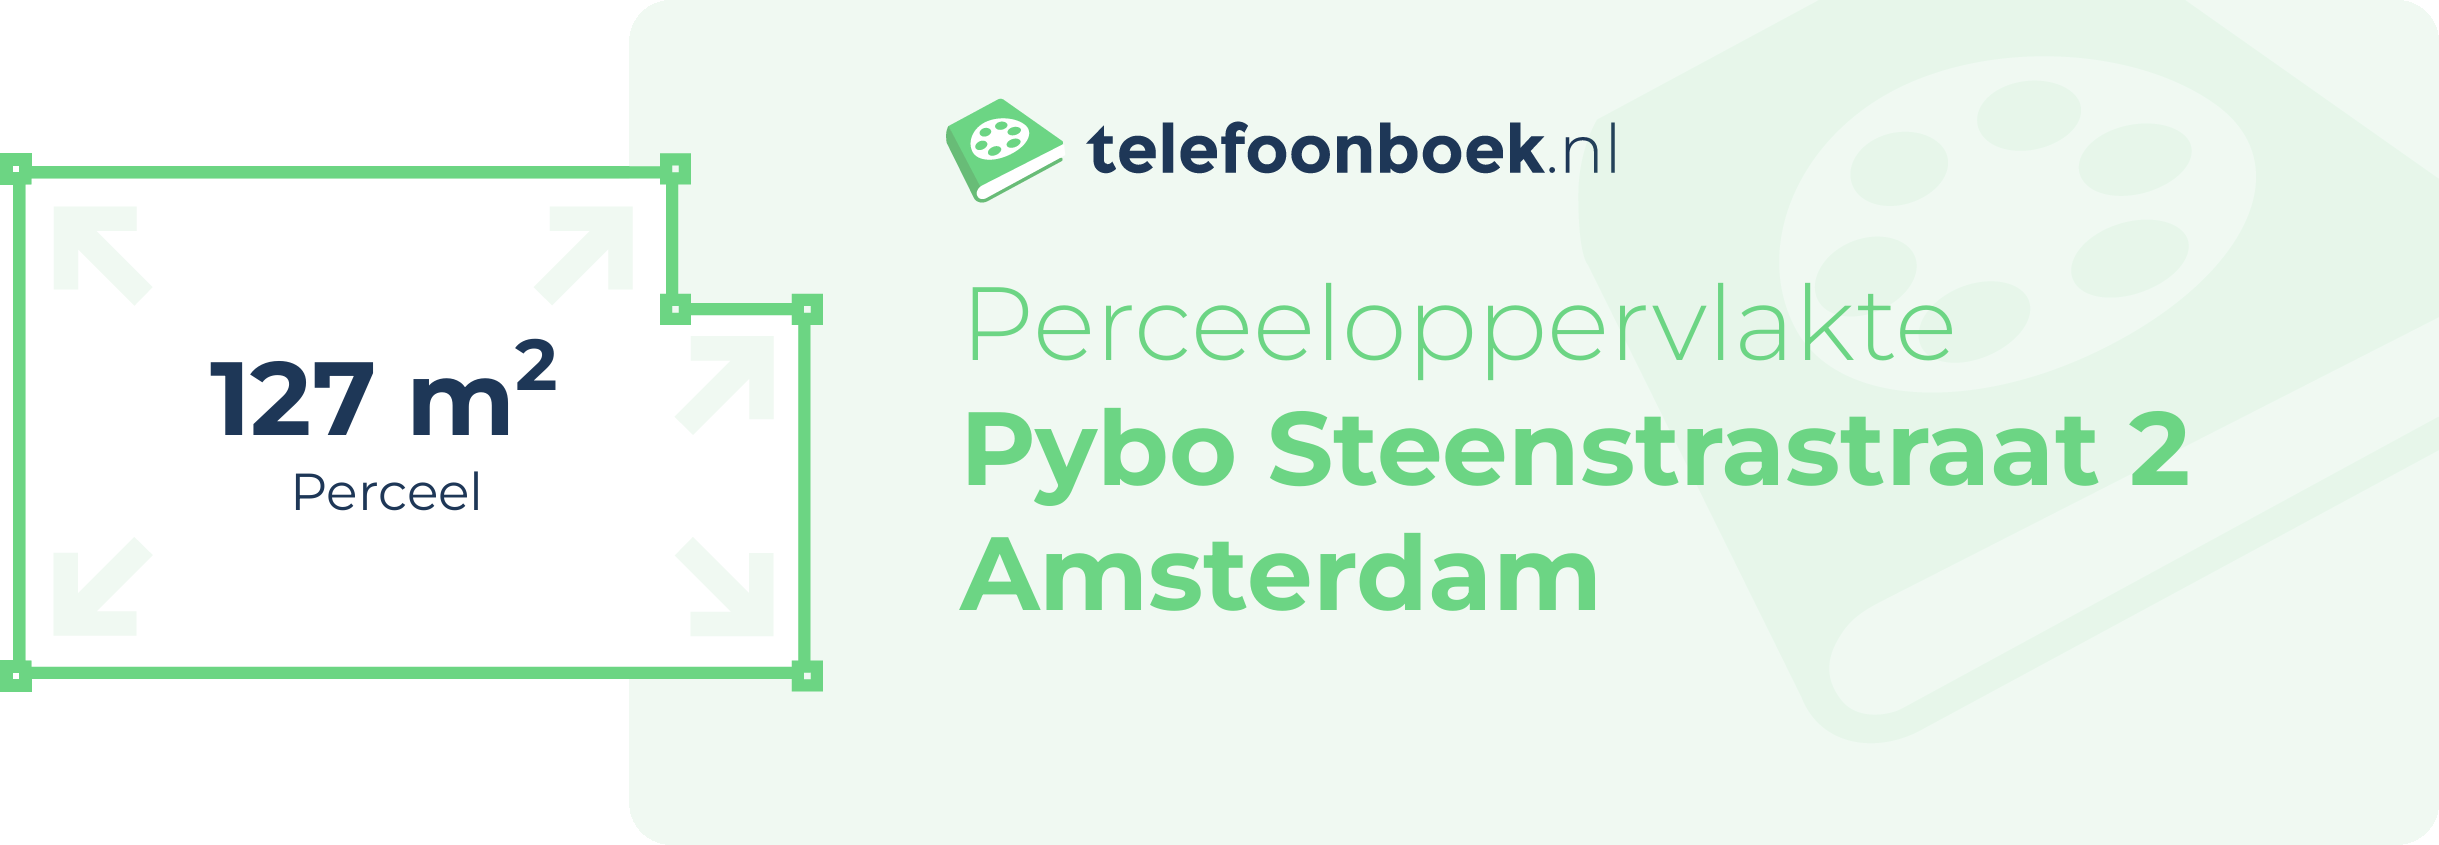 Perceeloppervlakte Pybo Steenstrastraat 2 Amsterdam